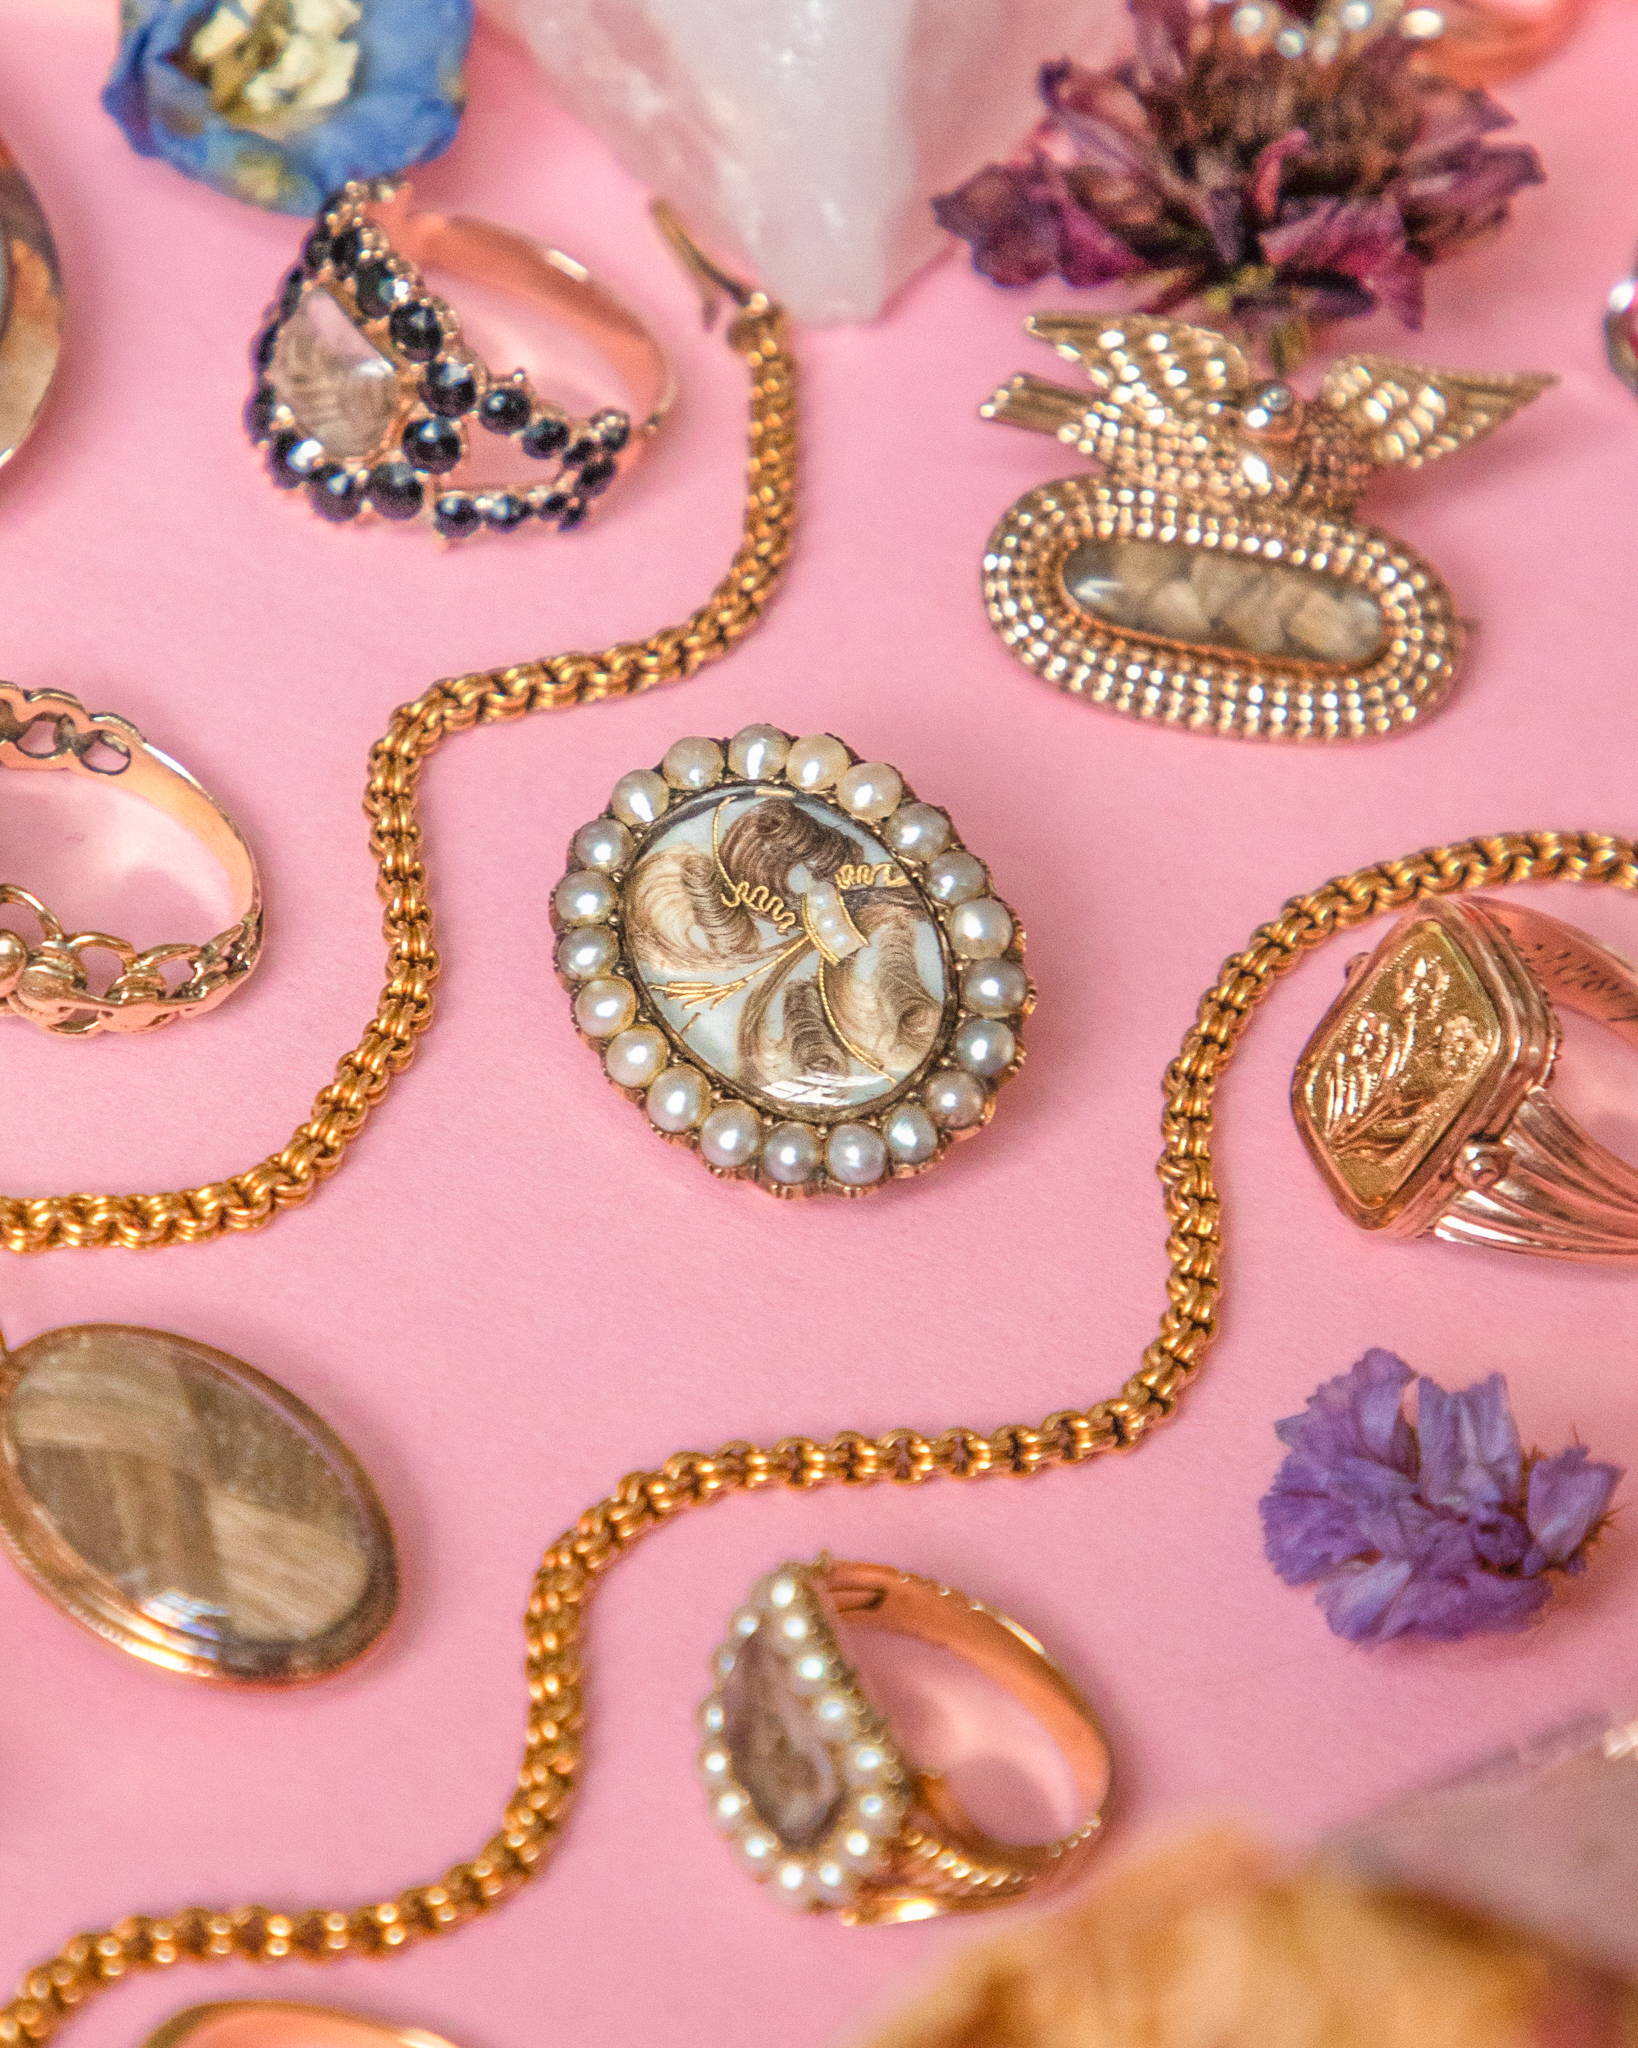 History Of Regency Jewelry Popular Jewels During The Regency Era ...